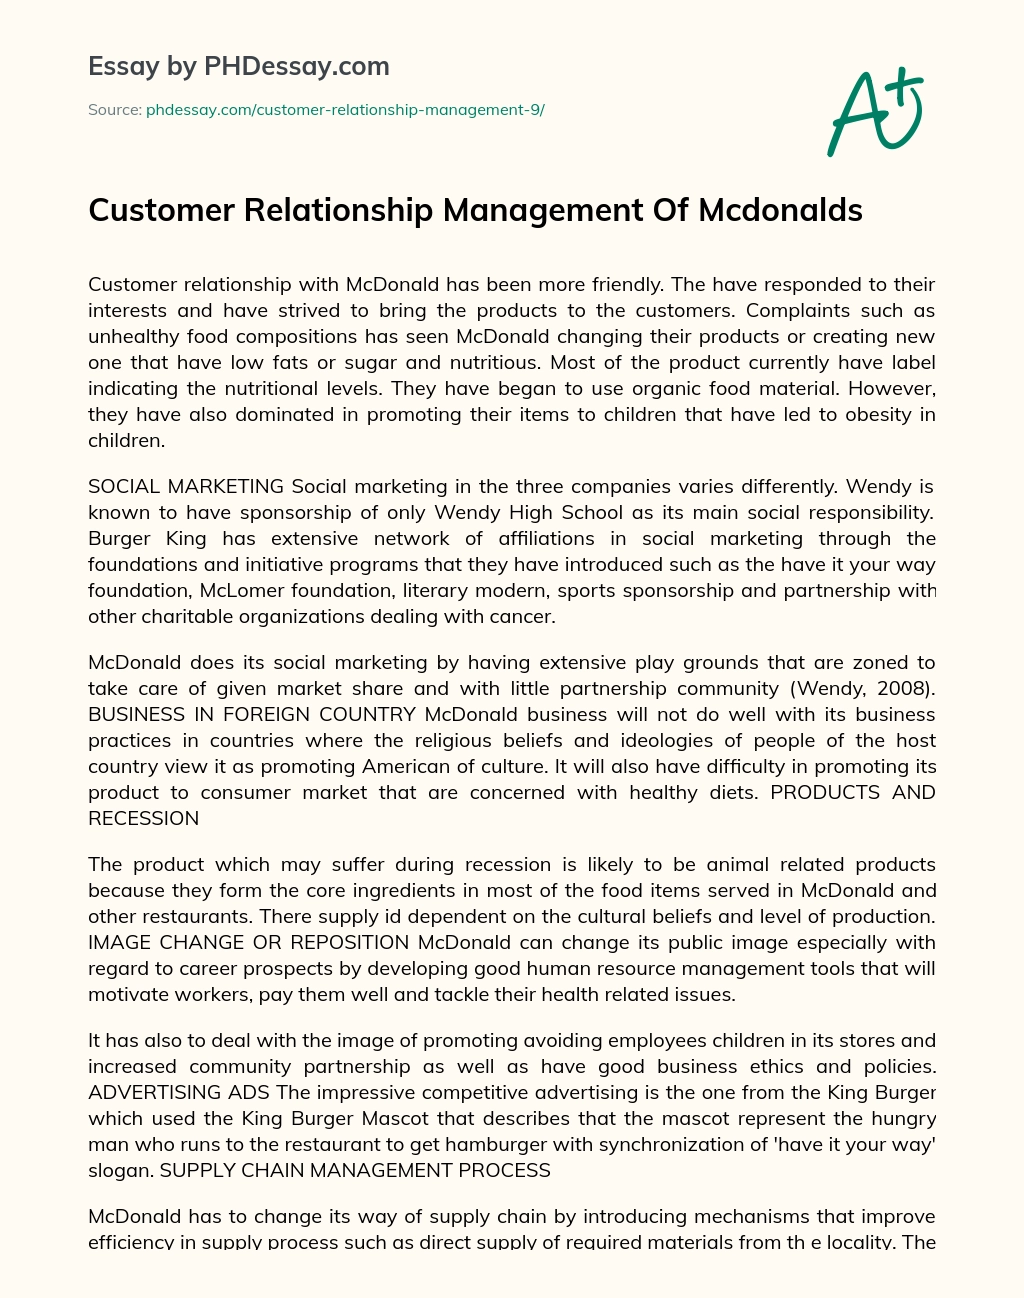 Customer Relationship Management Of Mcdonalds essay